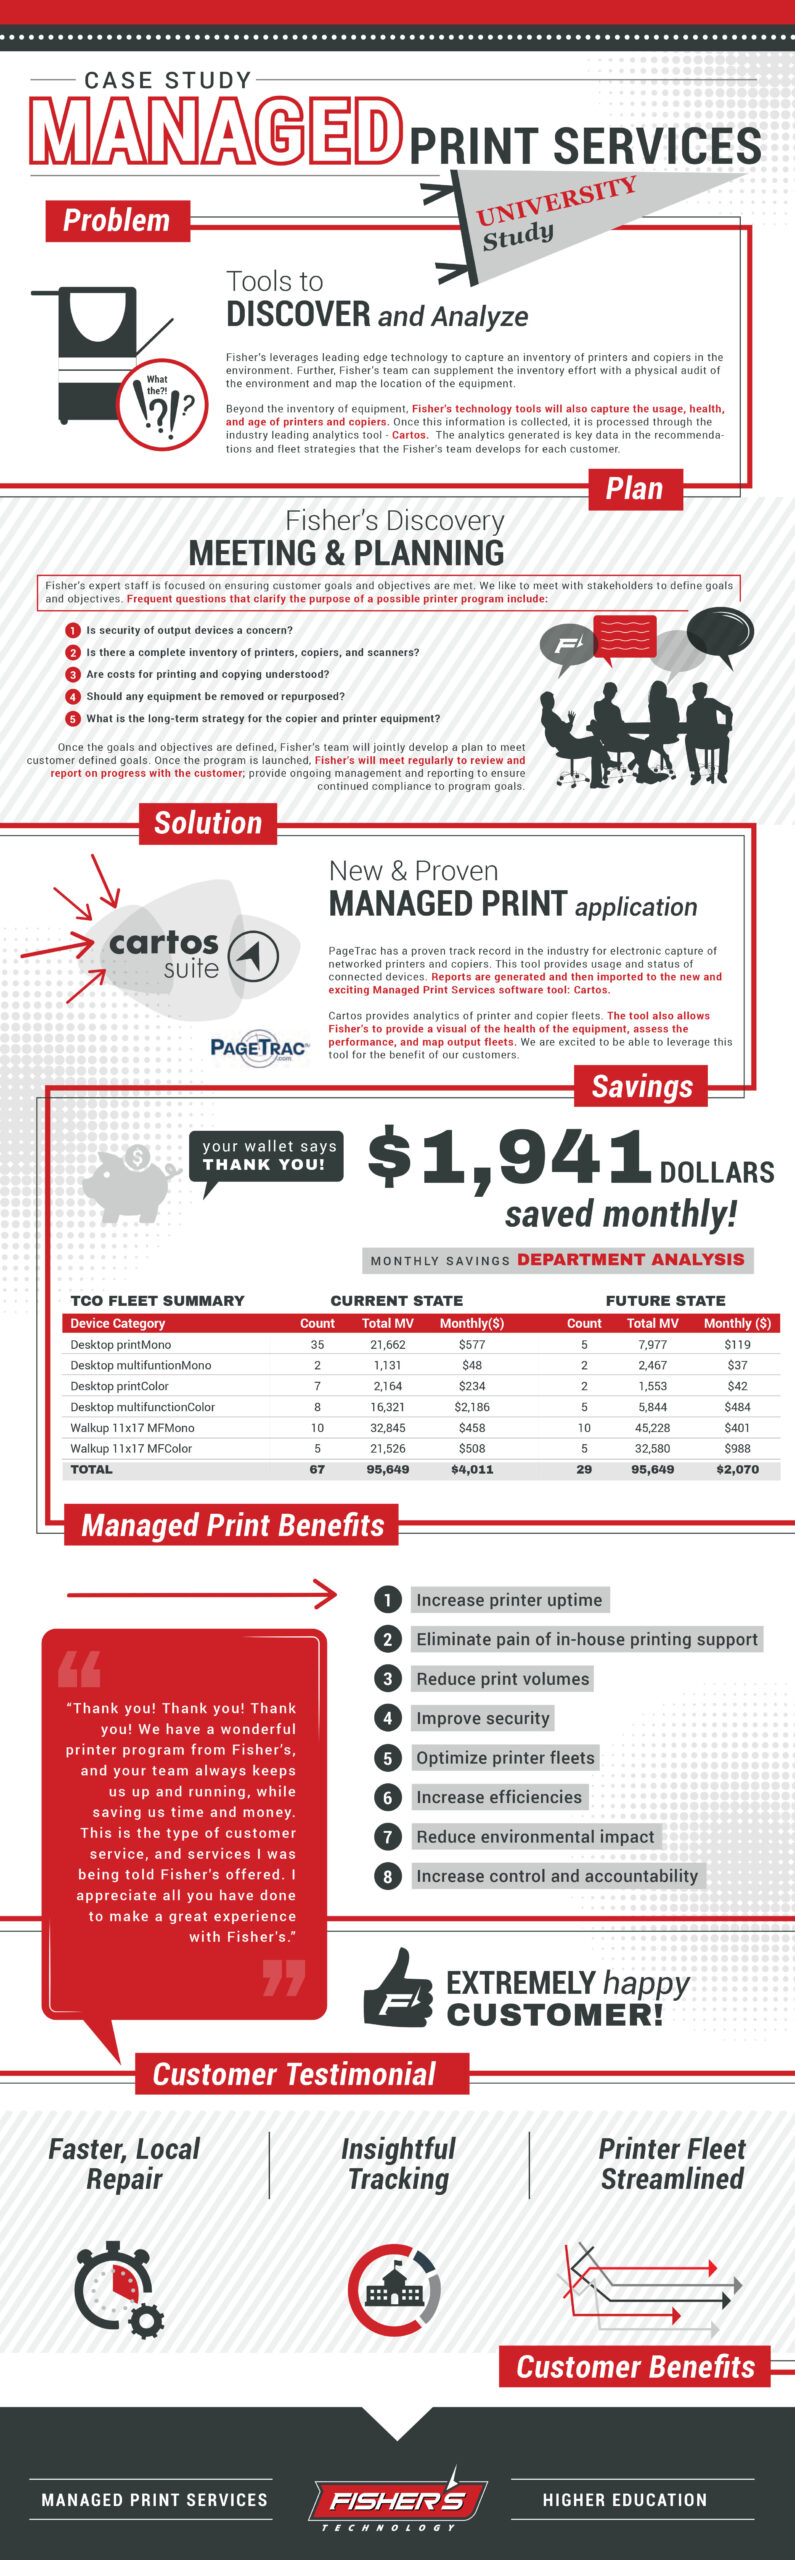 cartos managed print services case study